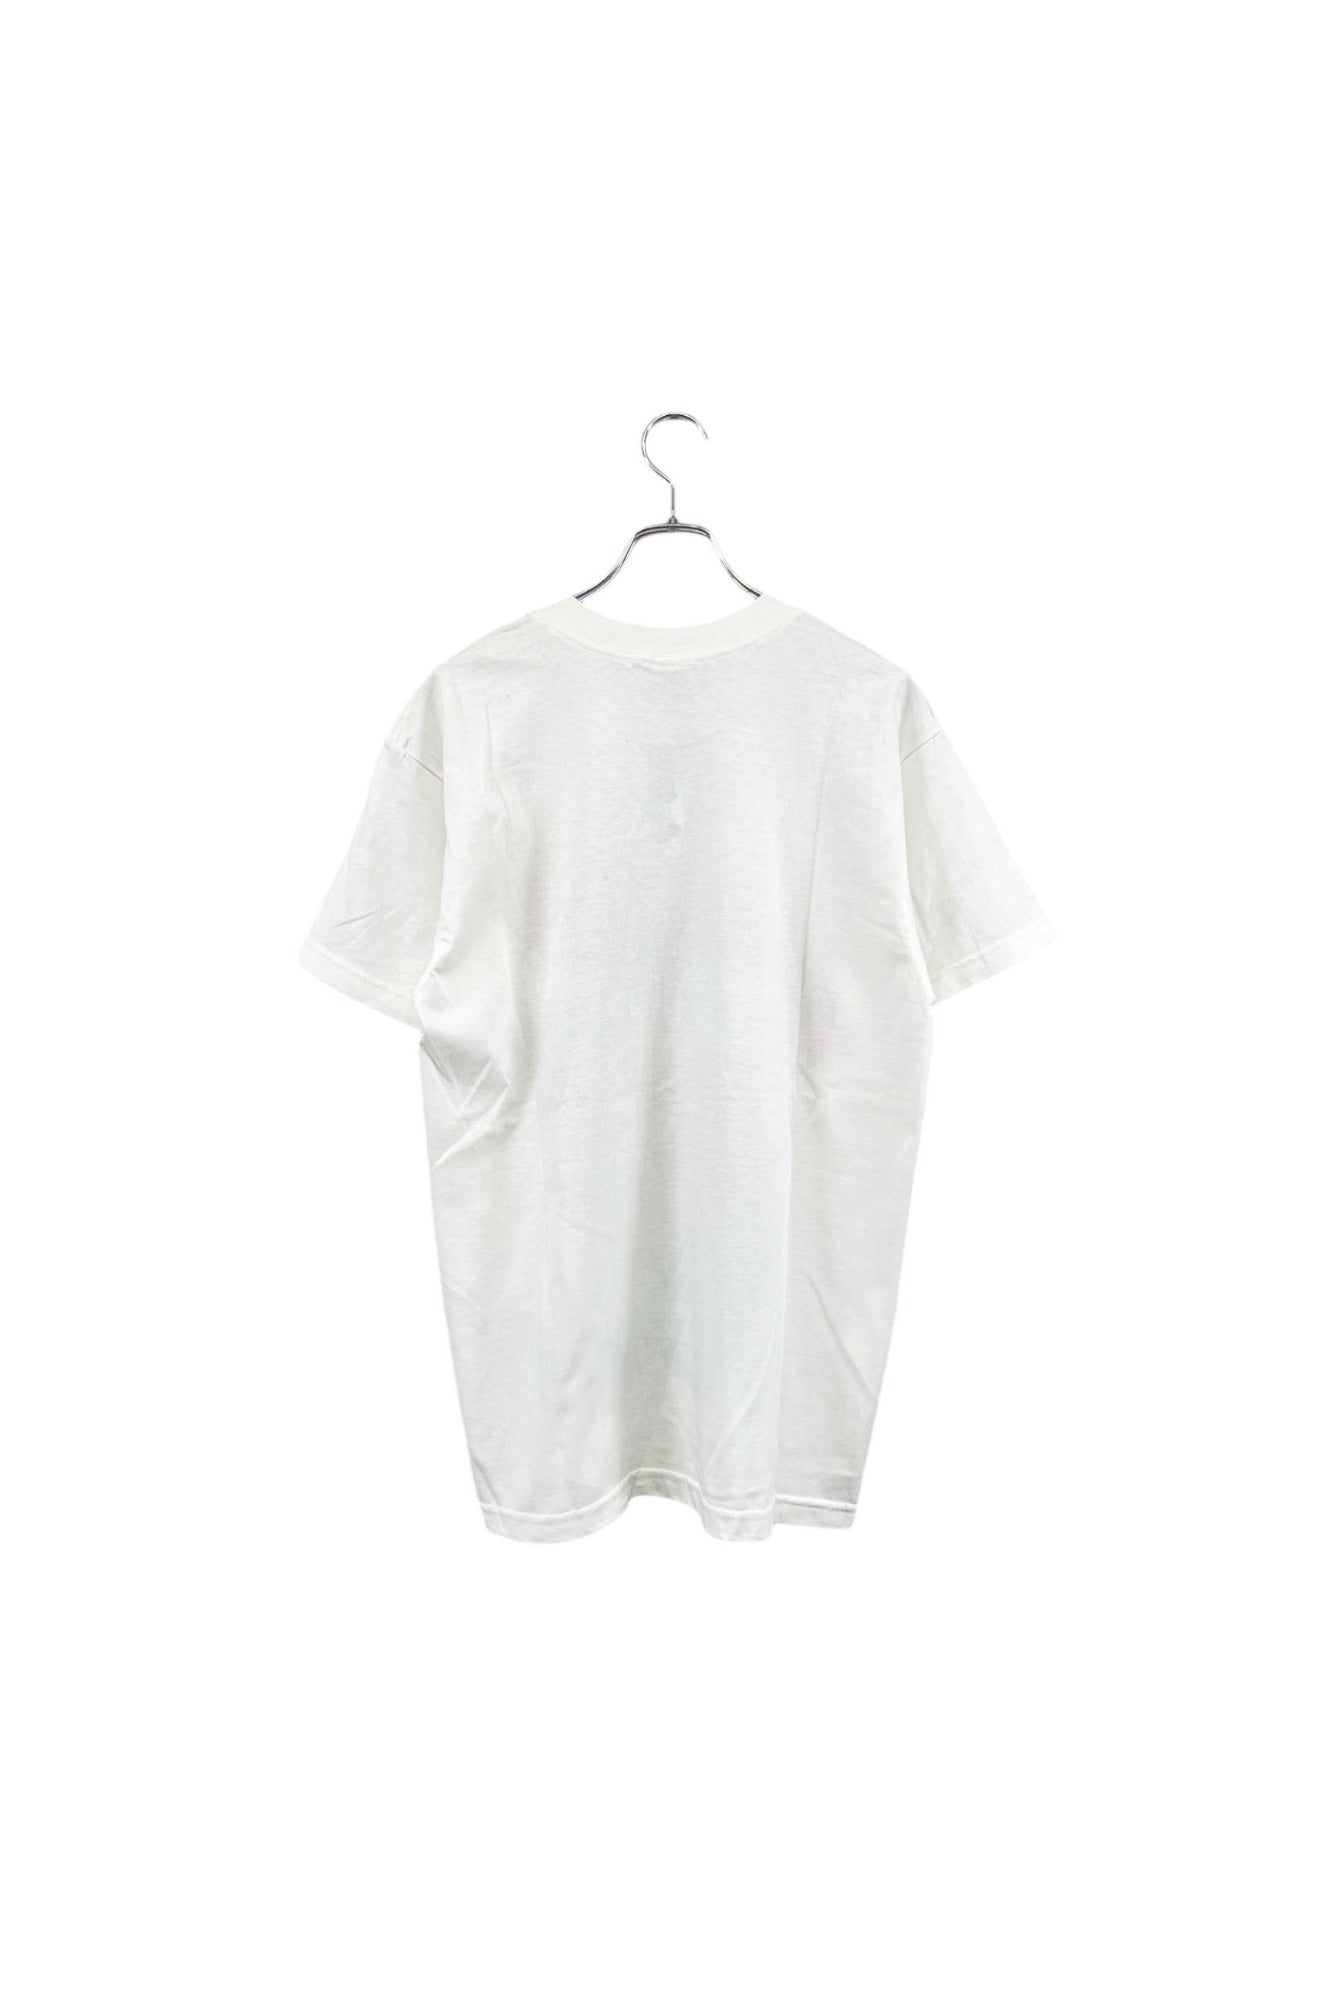 Made in USA FILA white T-shirt